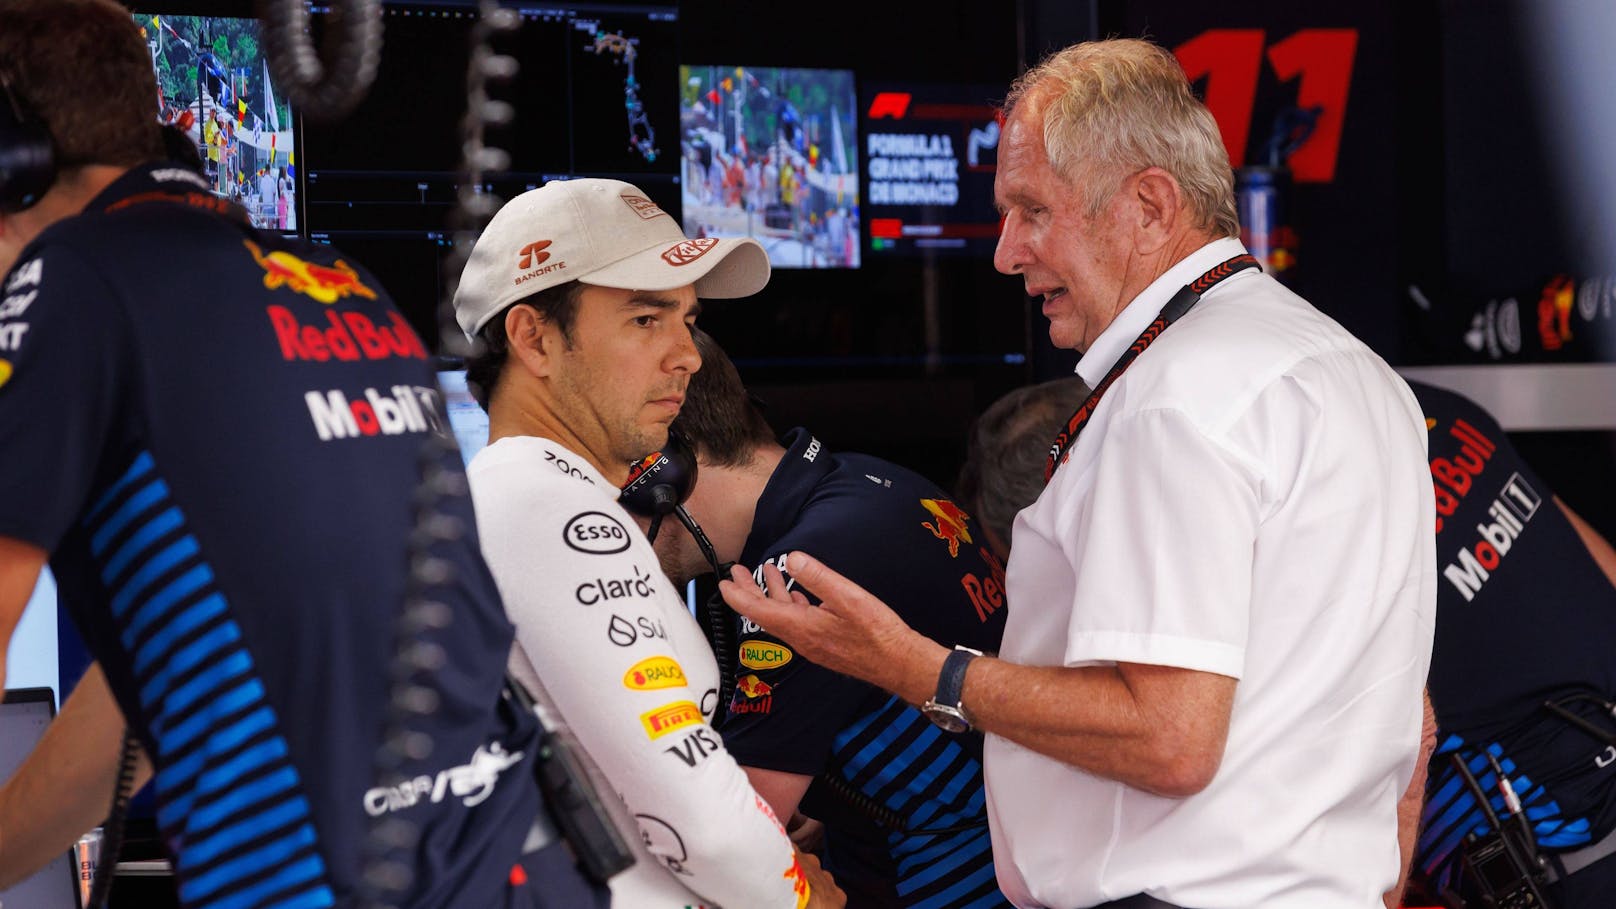 Knall bei Red Bull droht – Marko nennt Details